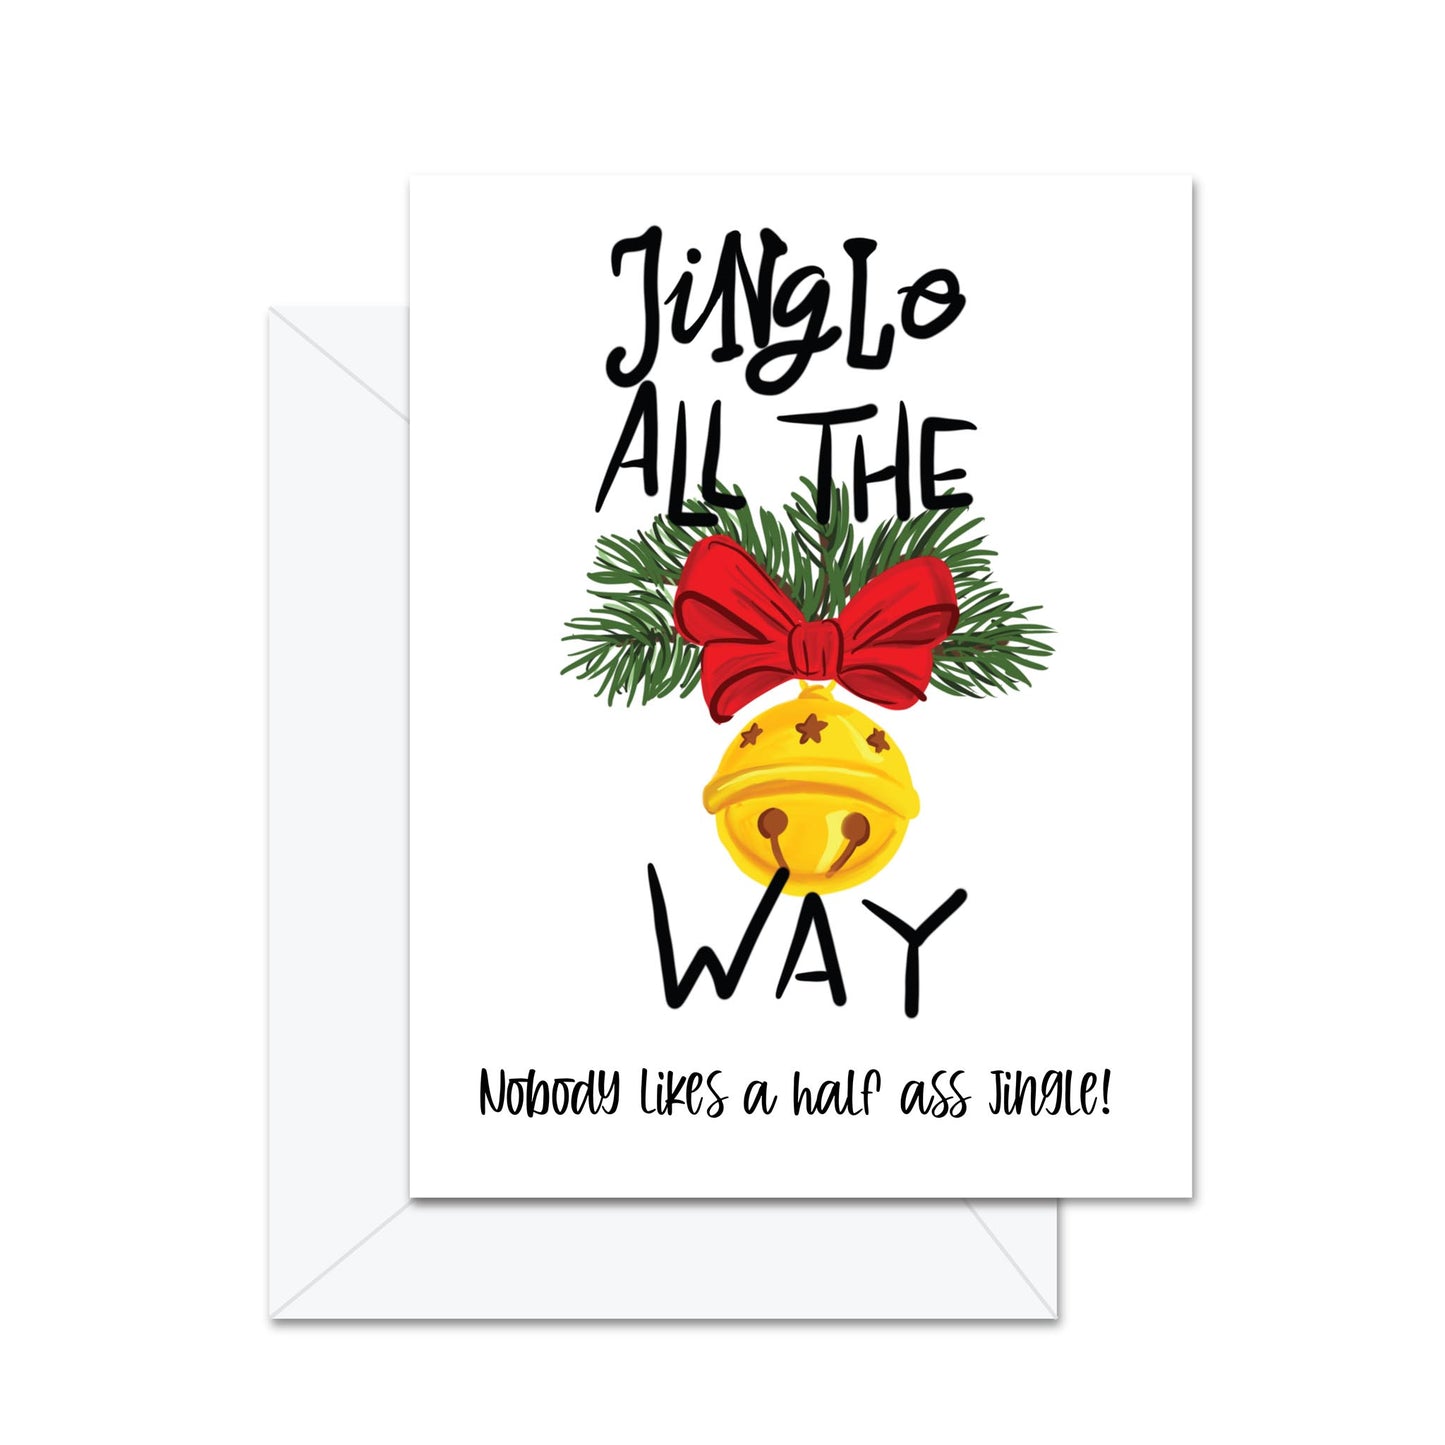 Jingle All The Way! Nobody Likes A Half Ass Jingle! - Greeting Card